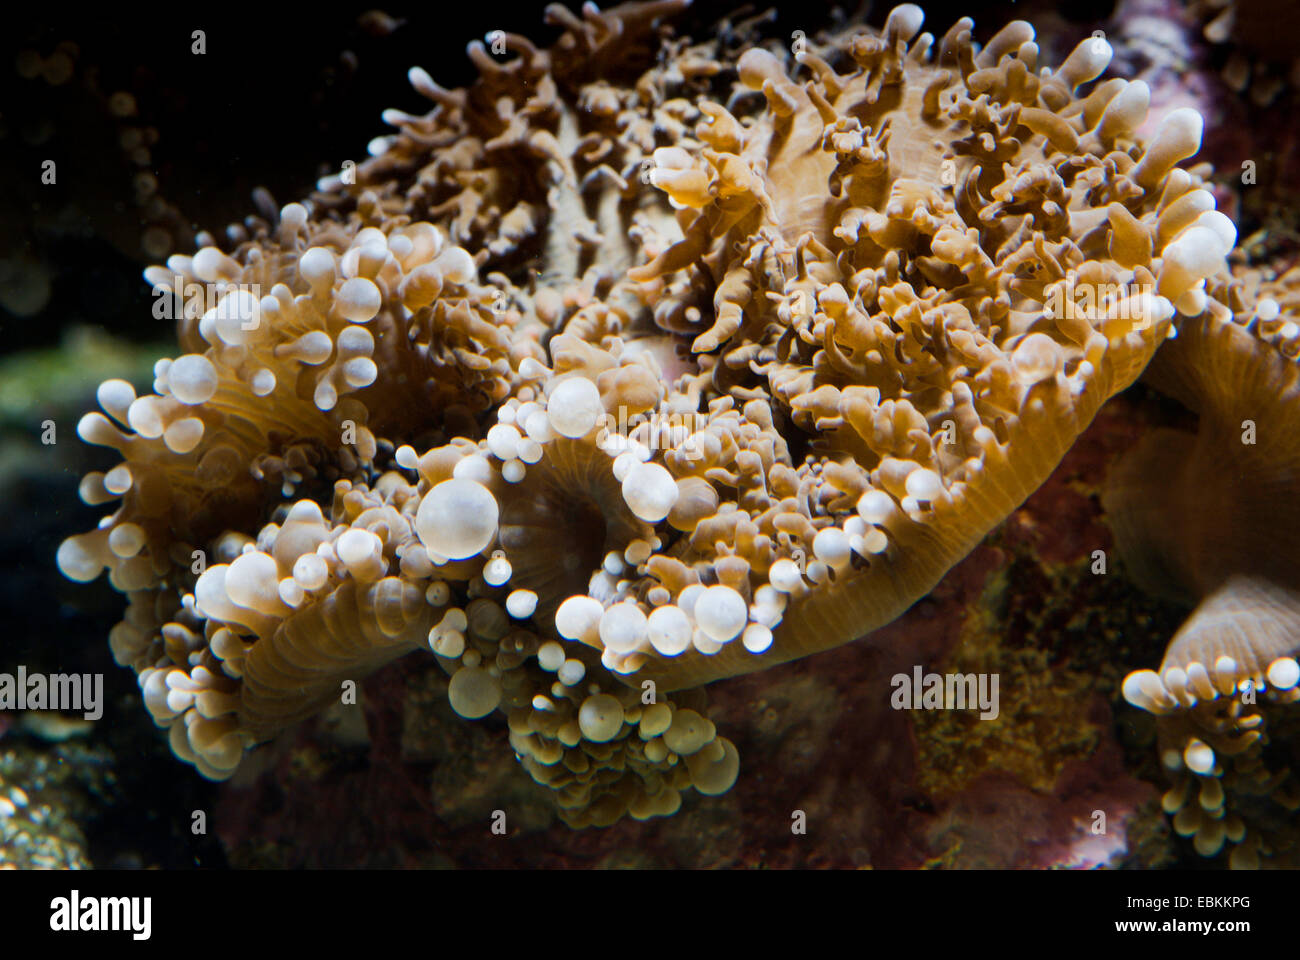 Pilz Anemone (Rhodactis spec.), Detailansicht Stockfoto